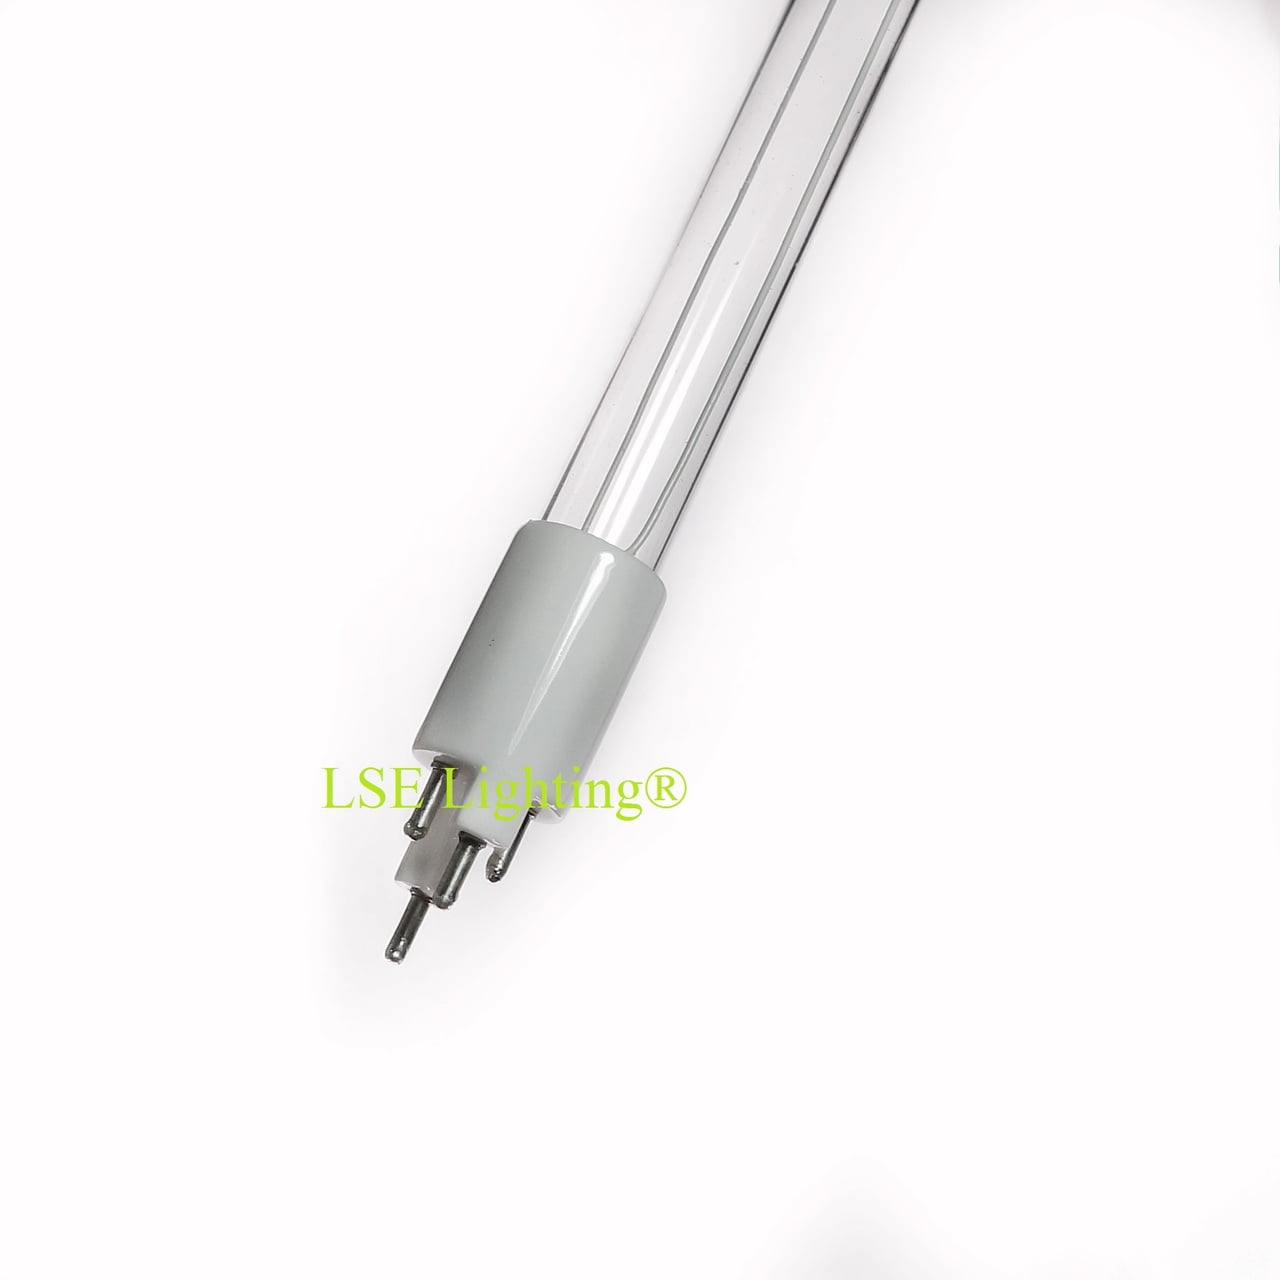 Generic Laguna Replacement Bulb for 14 Watt UV Sterilizer/Clarifier PT1671 Part # PT1672 